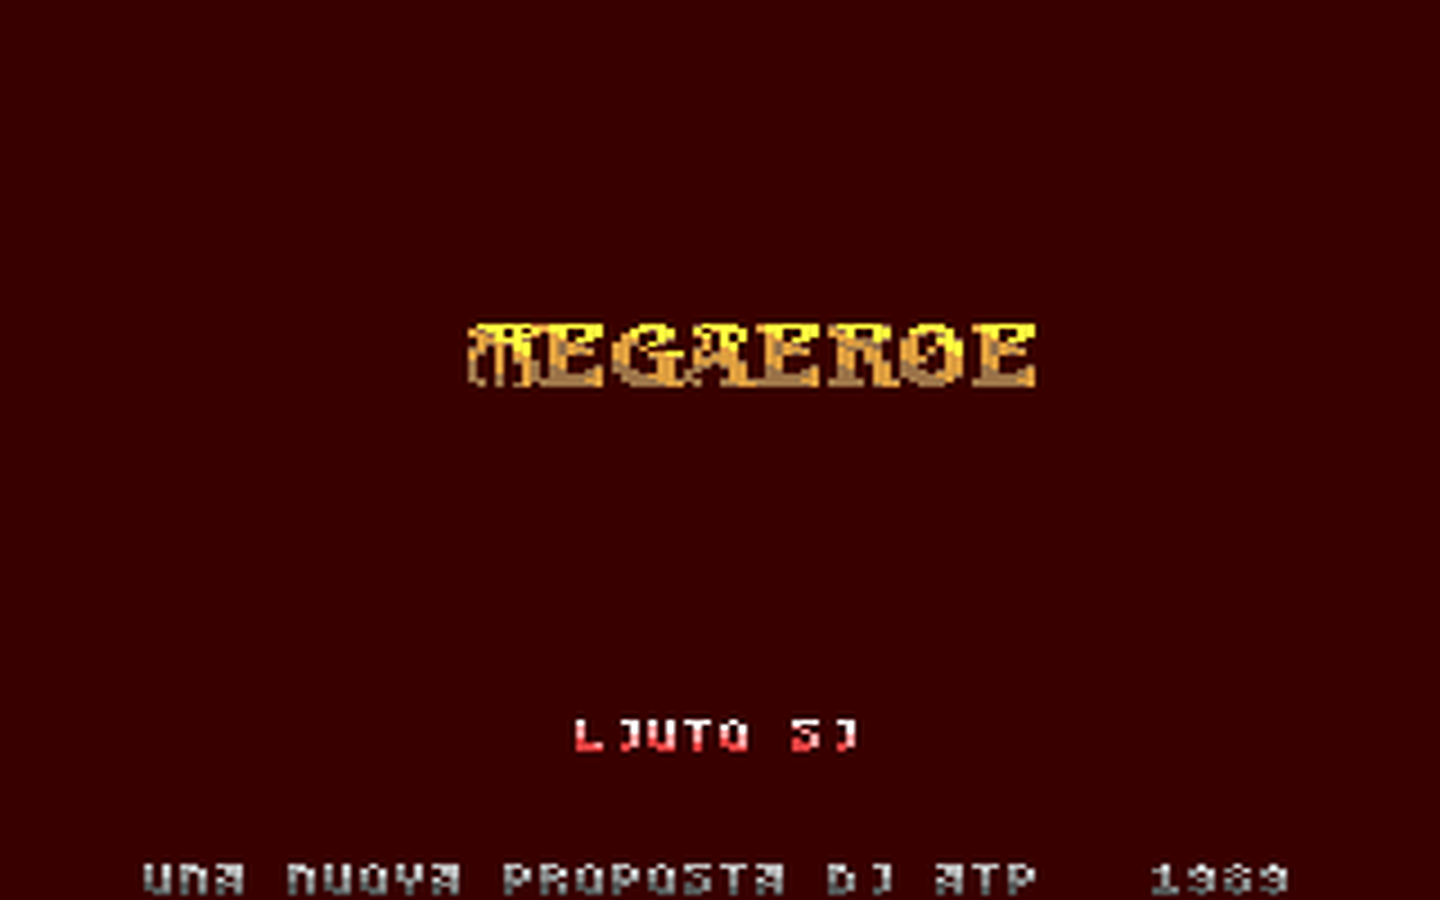 C64 GameBase Megaeroe Edigamma_S.r.l./Super_Game_2000_Nuova_Serie 1989